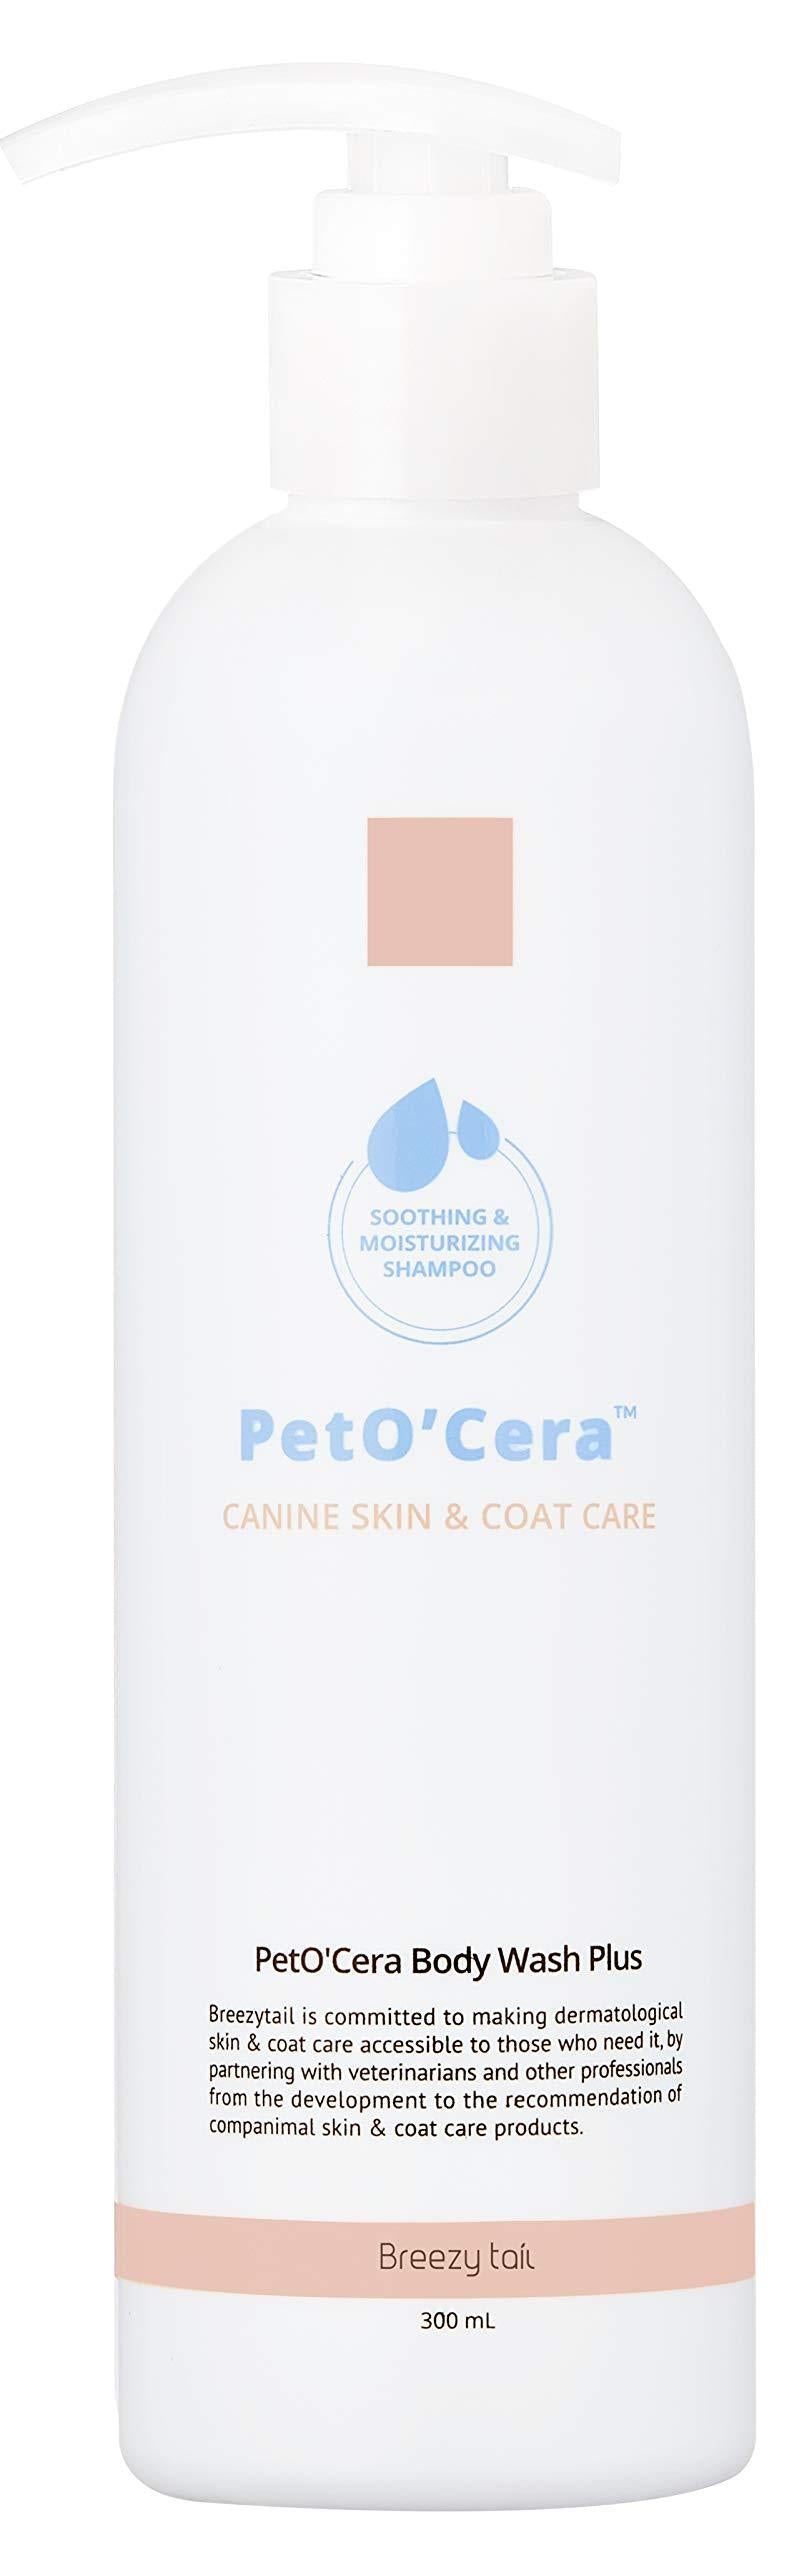 [Australia] - PetO'Cera Body Wash Plus - Hypoallergenic Canine Skincare Shampoo | Skin & Coat Care Shampoo for Dogs | Veterinarian Formulated Shampoo for Dogs 10.14oz 